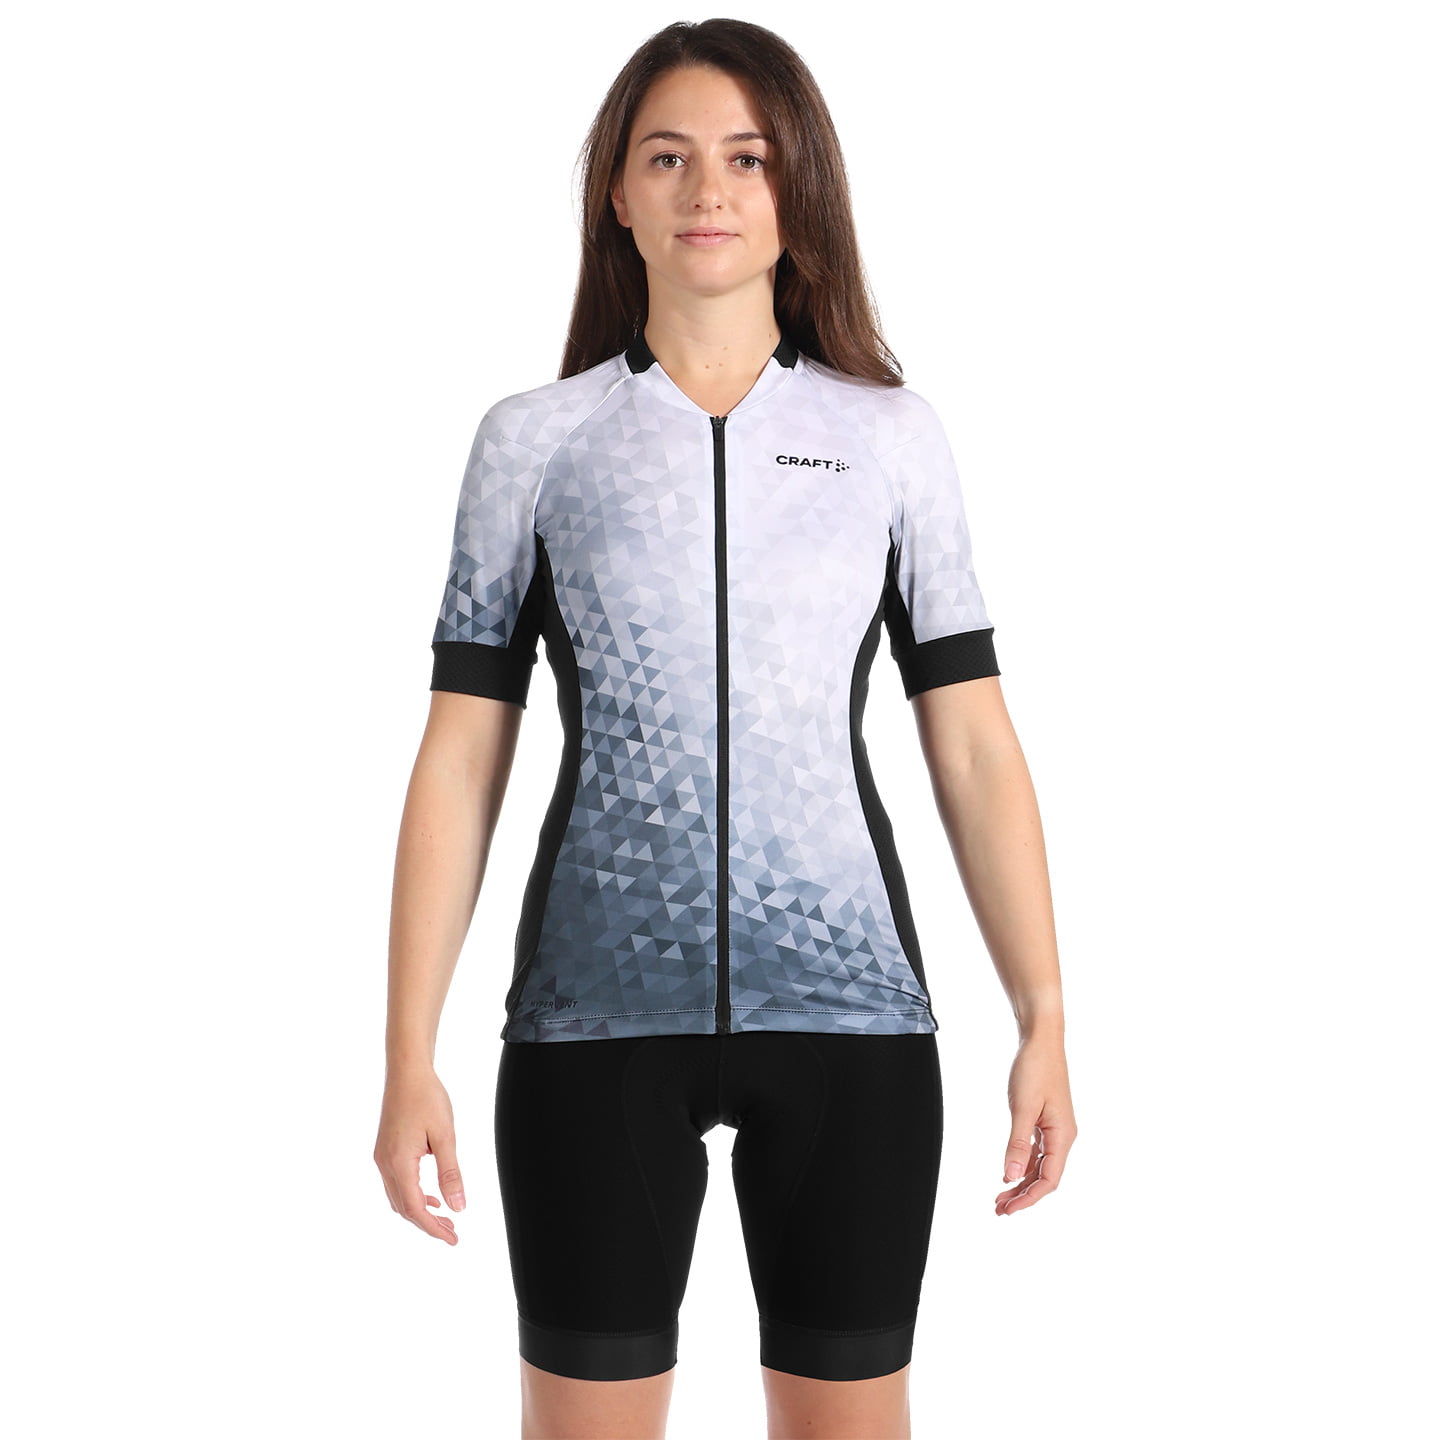 CRAFT Endurance Women’s Set (cycling jersey + cycling shorts) Women’s Set (2 pieces), Cycling clothing